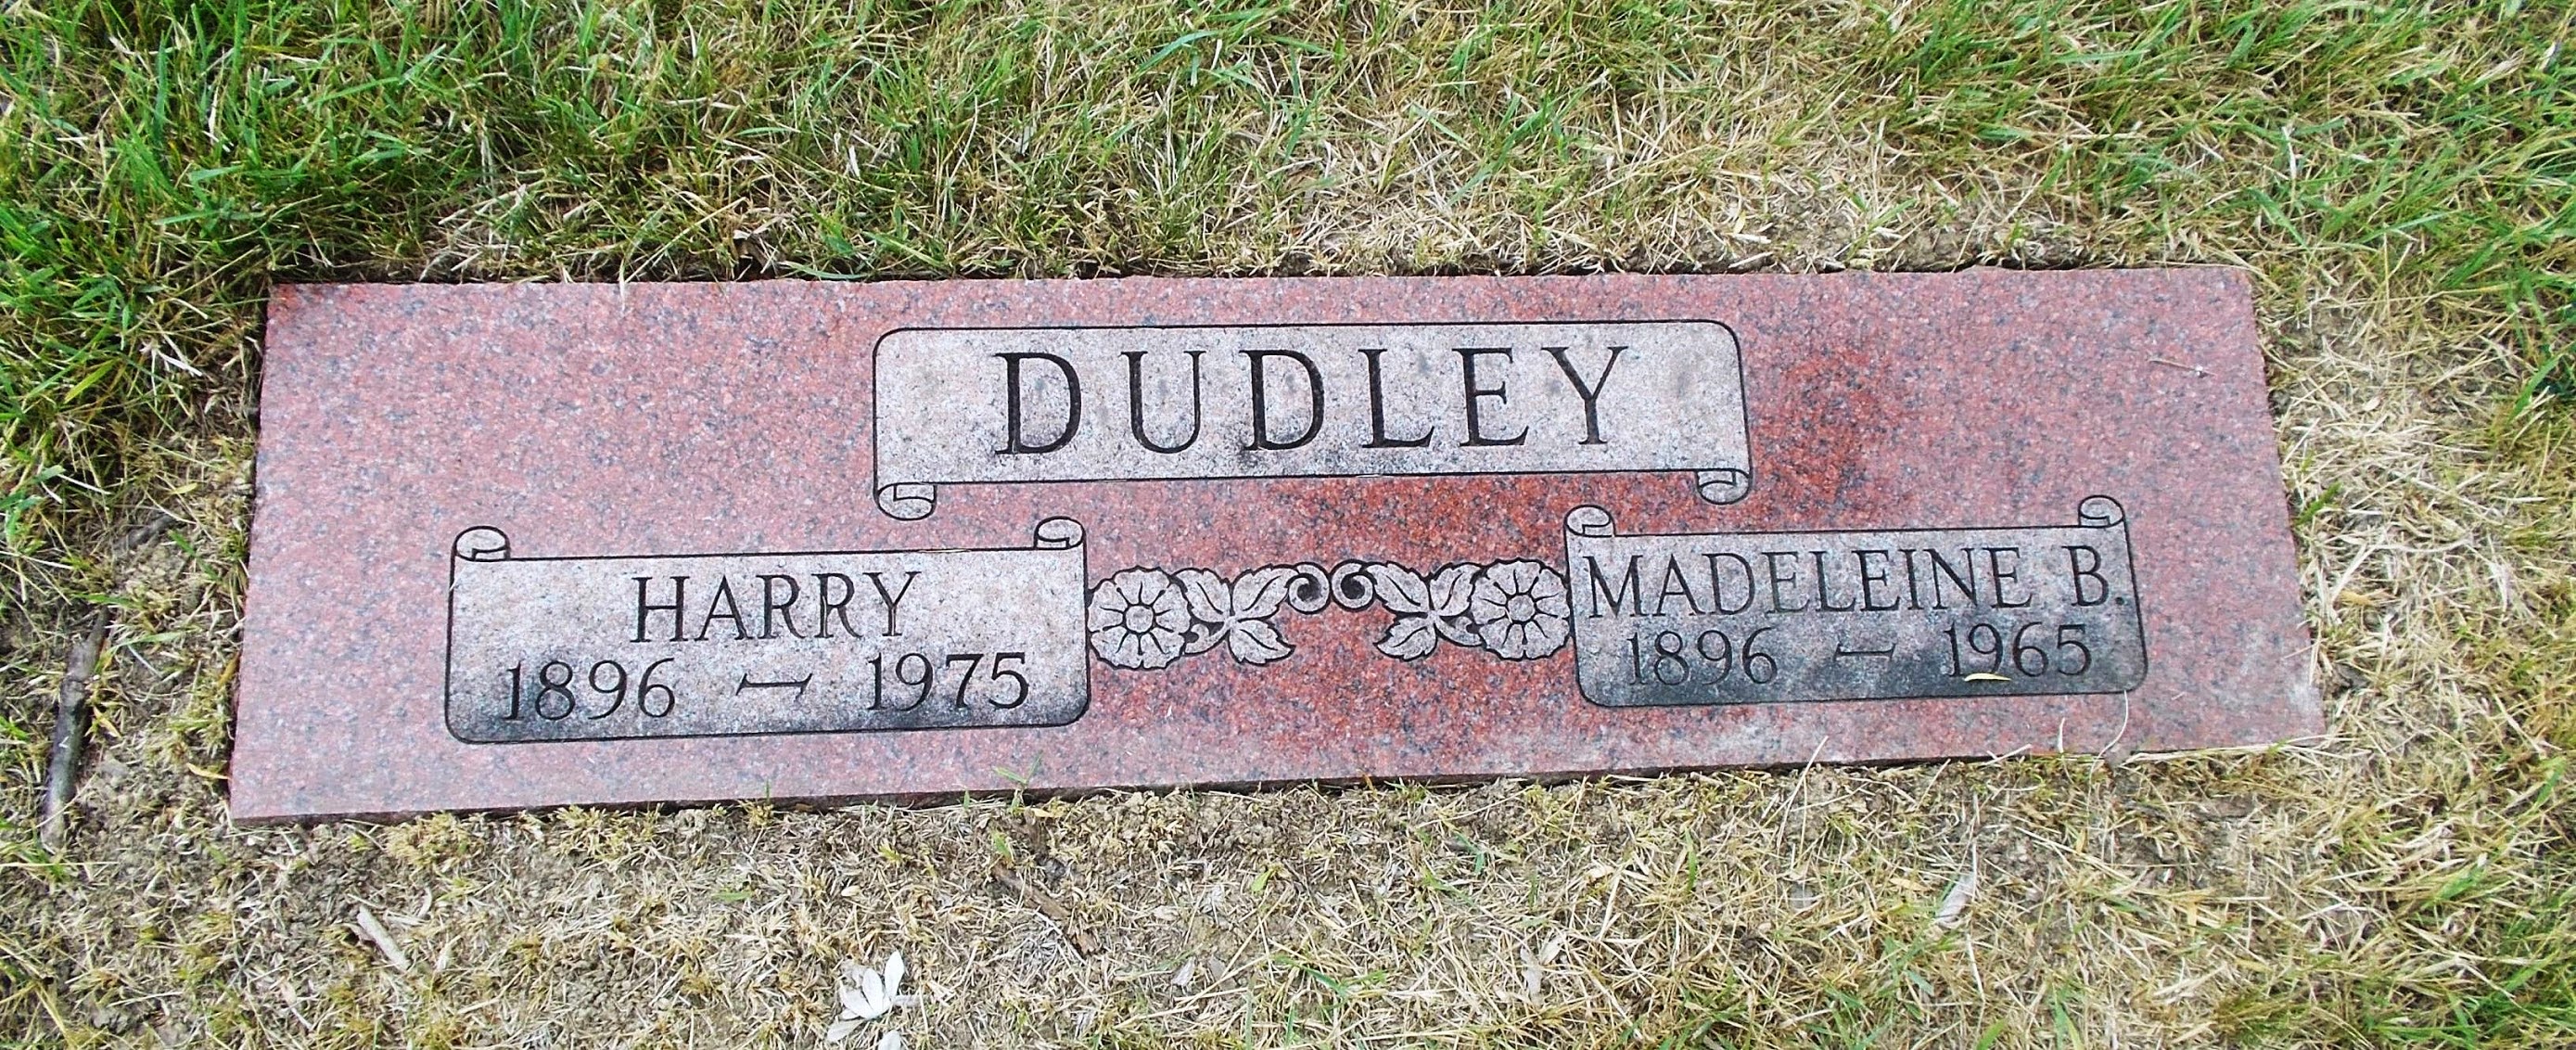 Harry Dudley